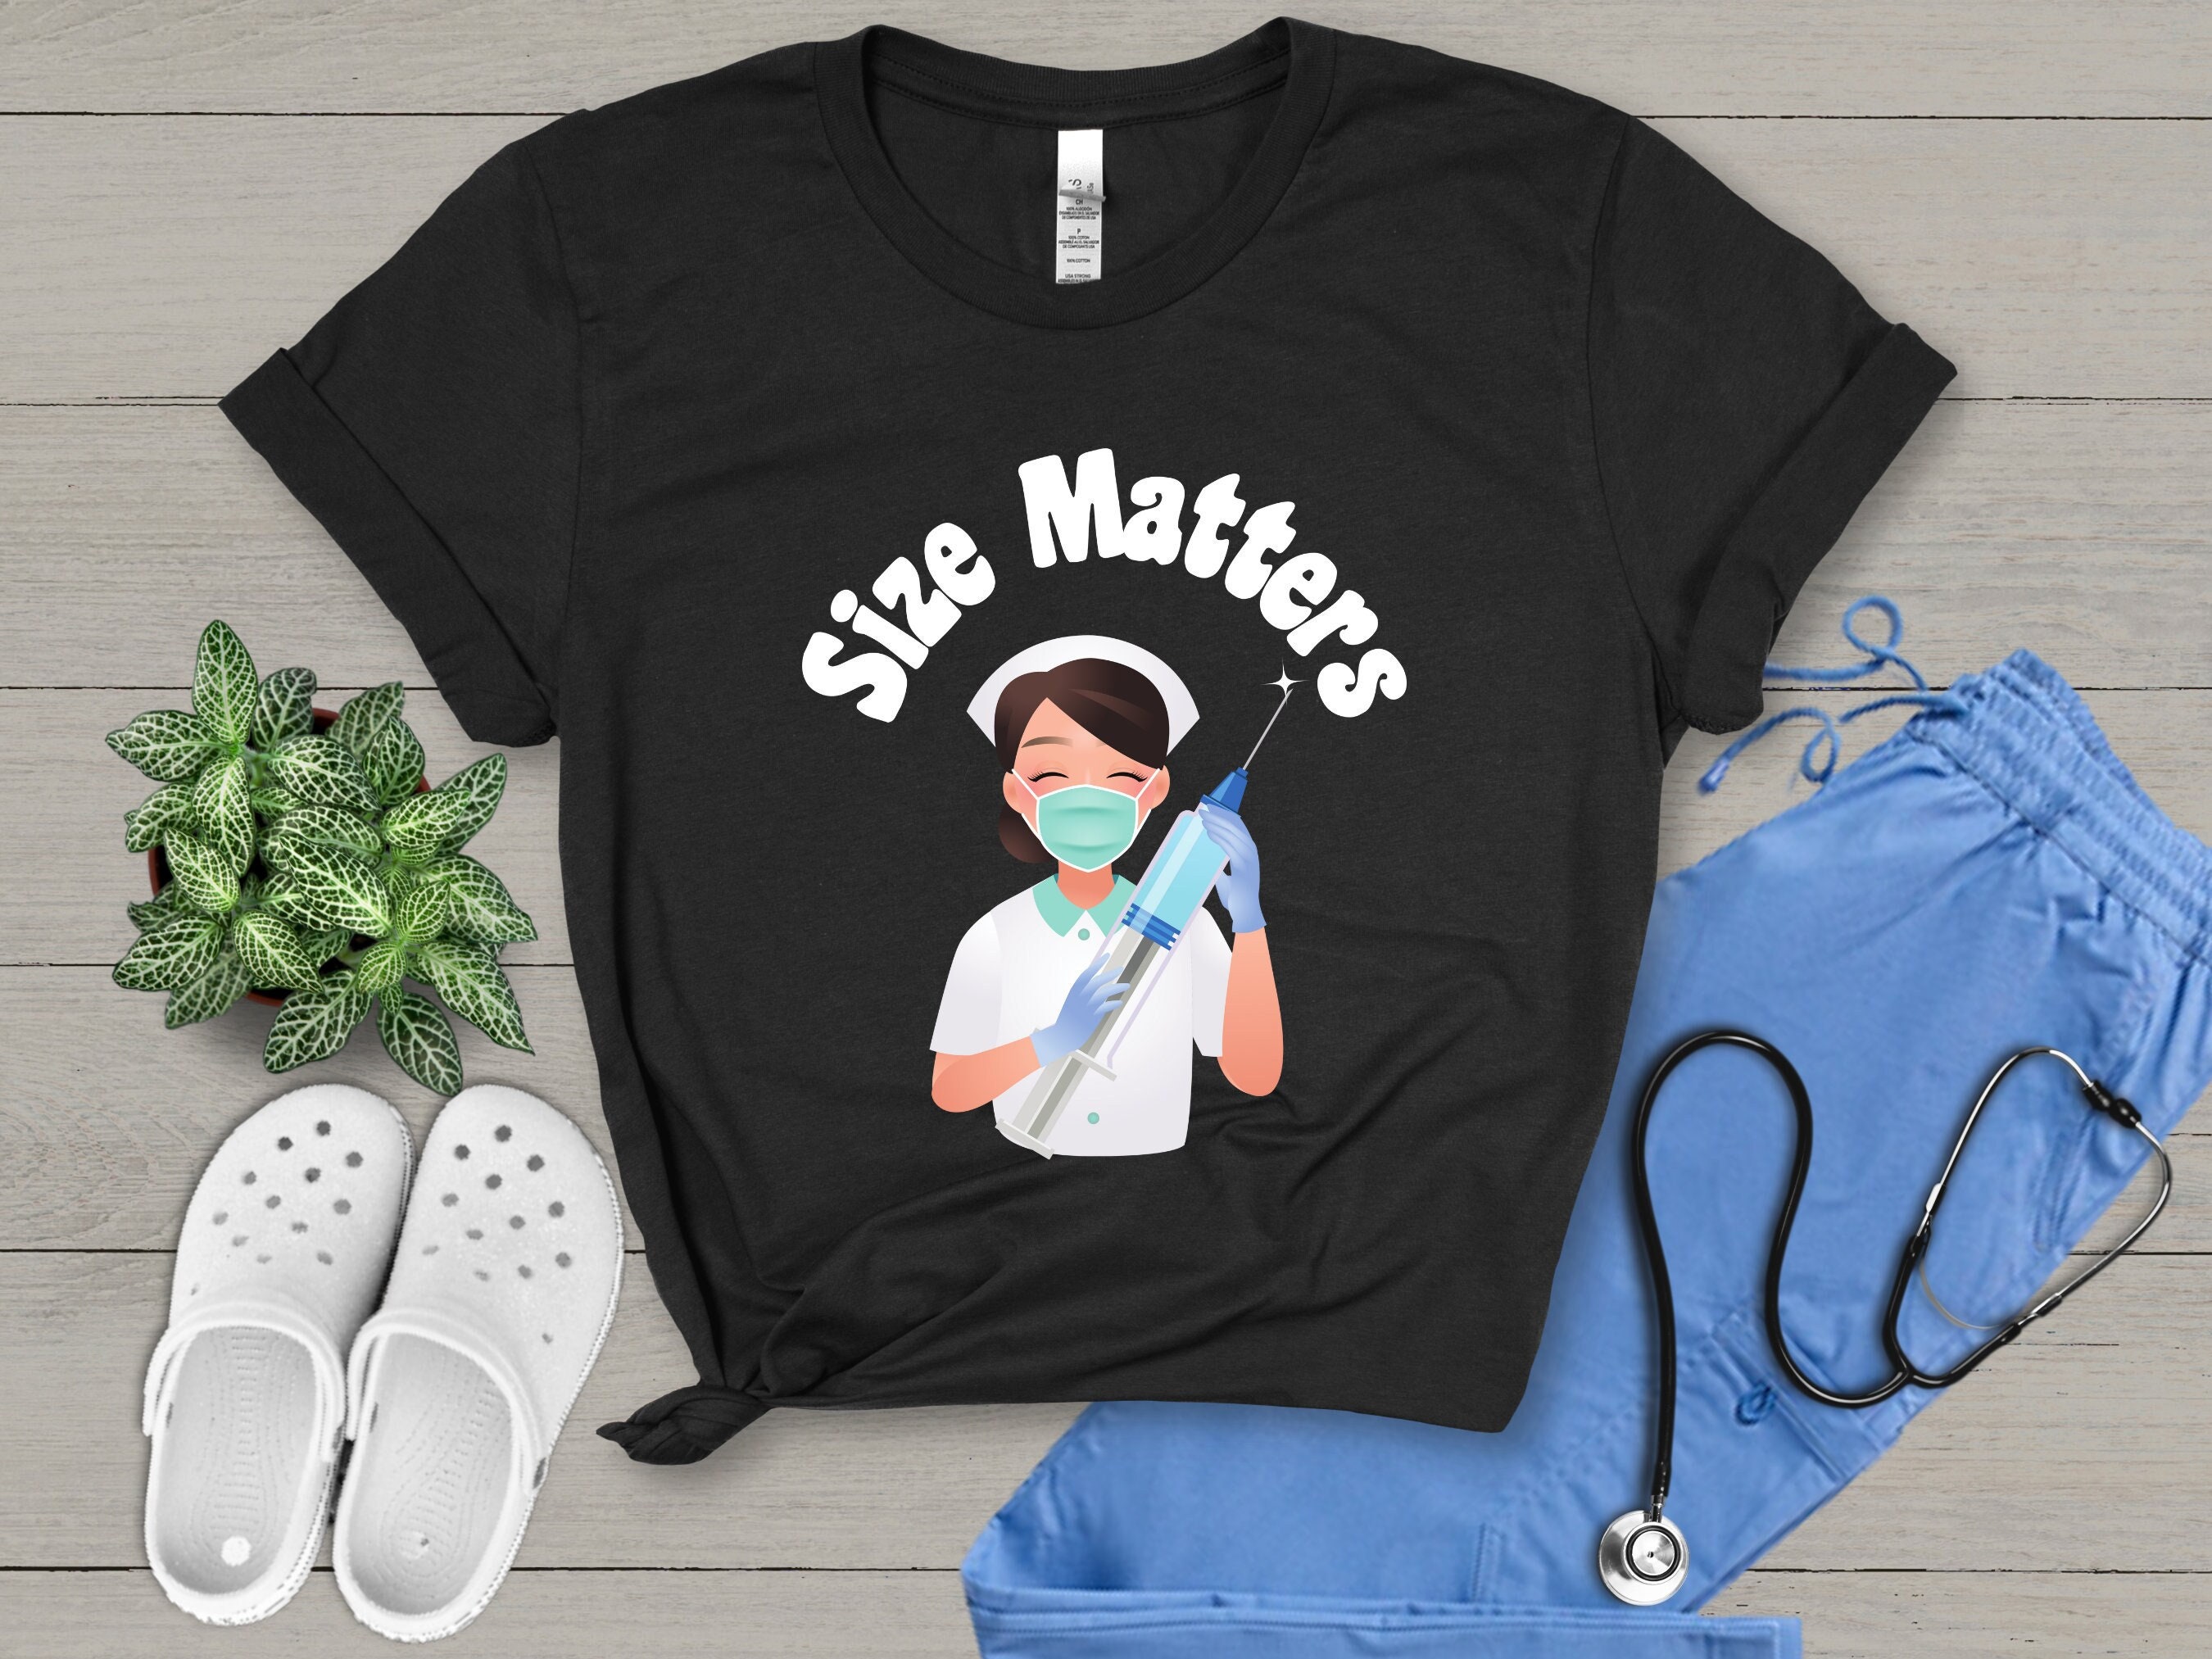 Nurse Nursing Clinic Medical Stuff Paramedic Men's T-Shirt